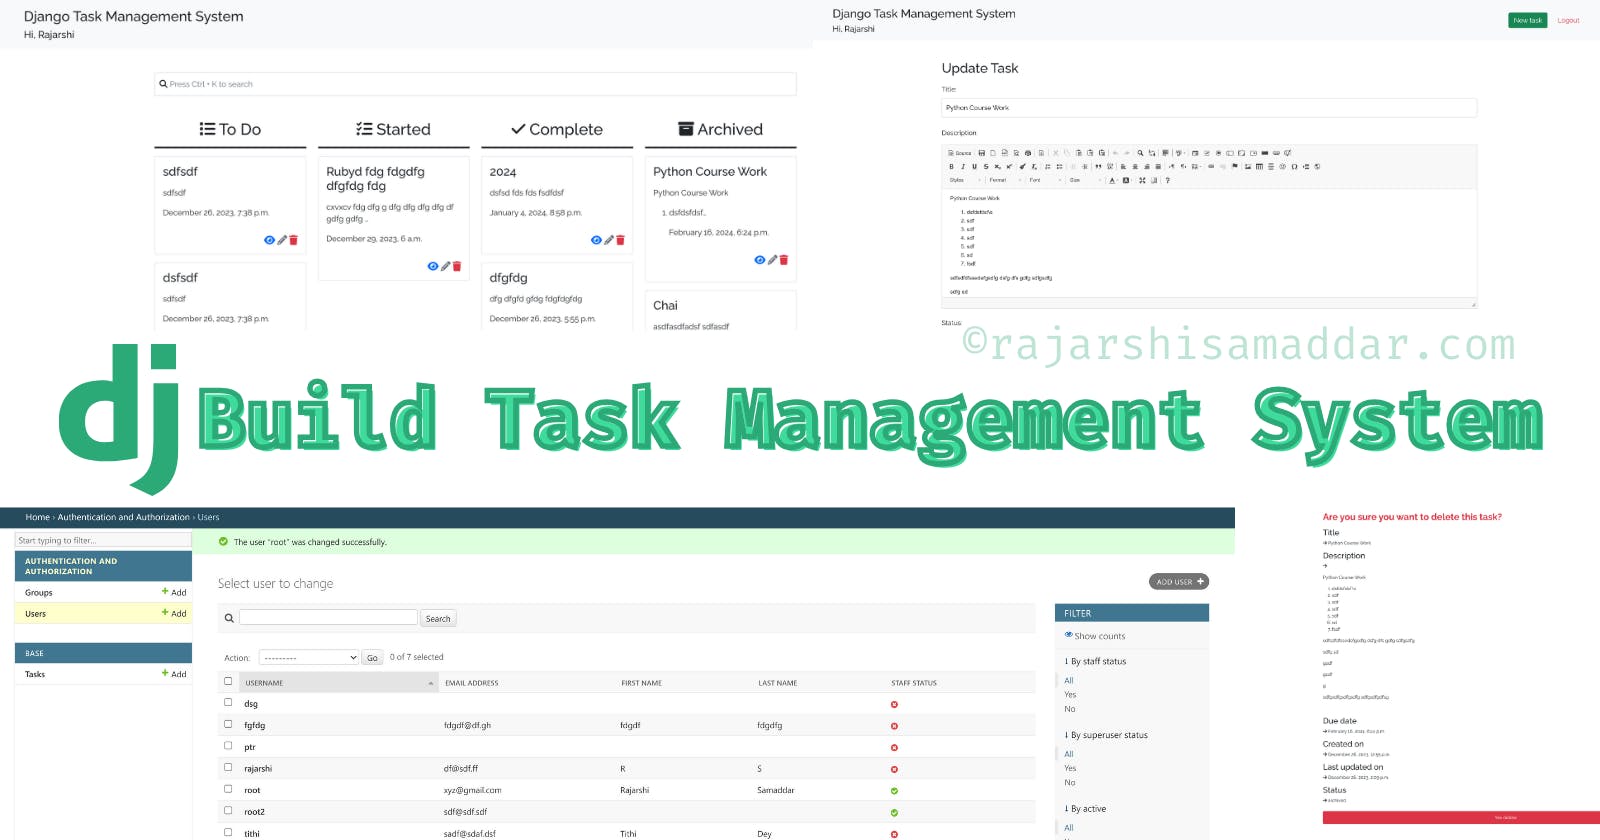 Task Management System using Django